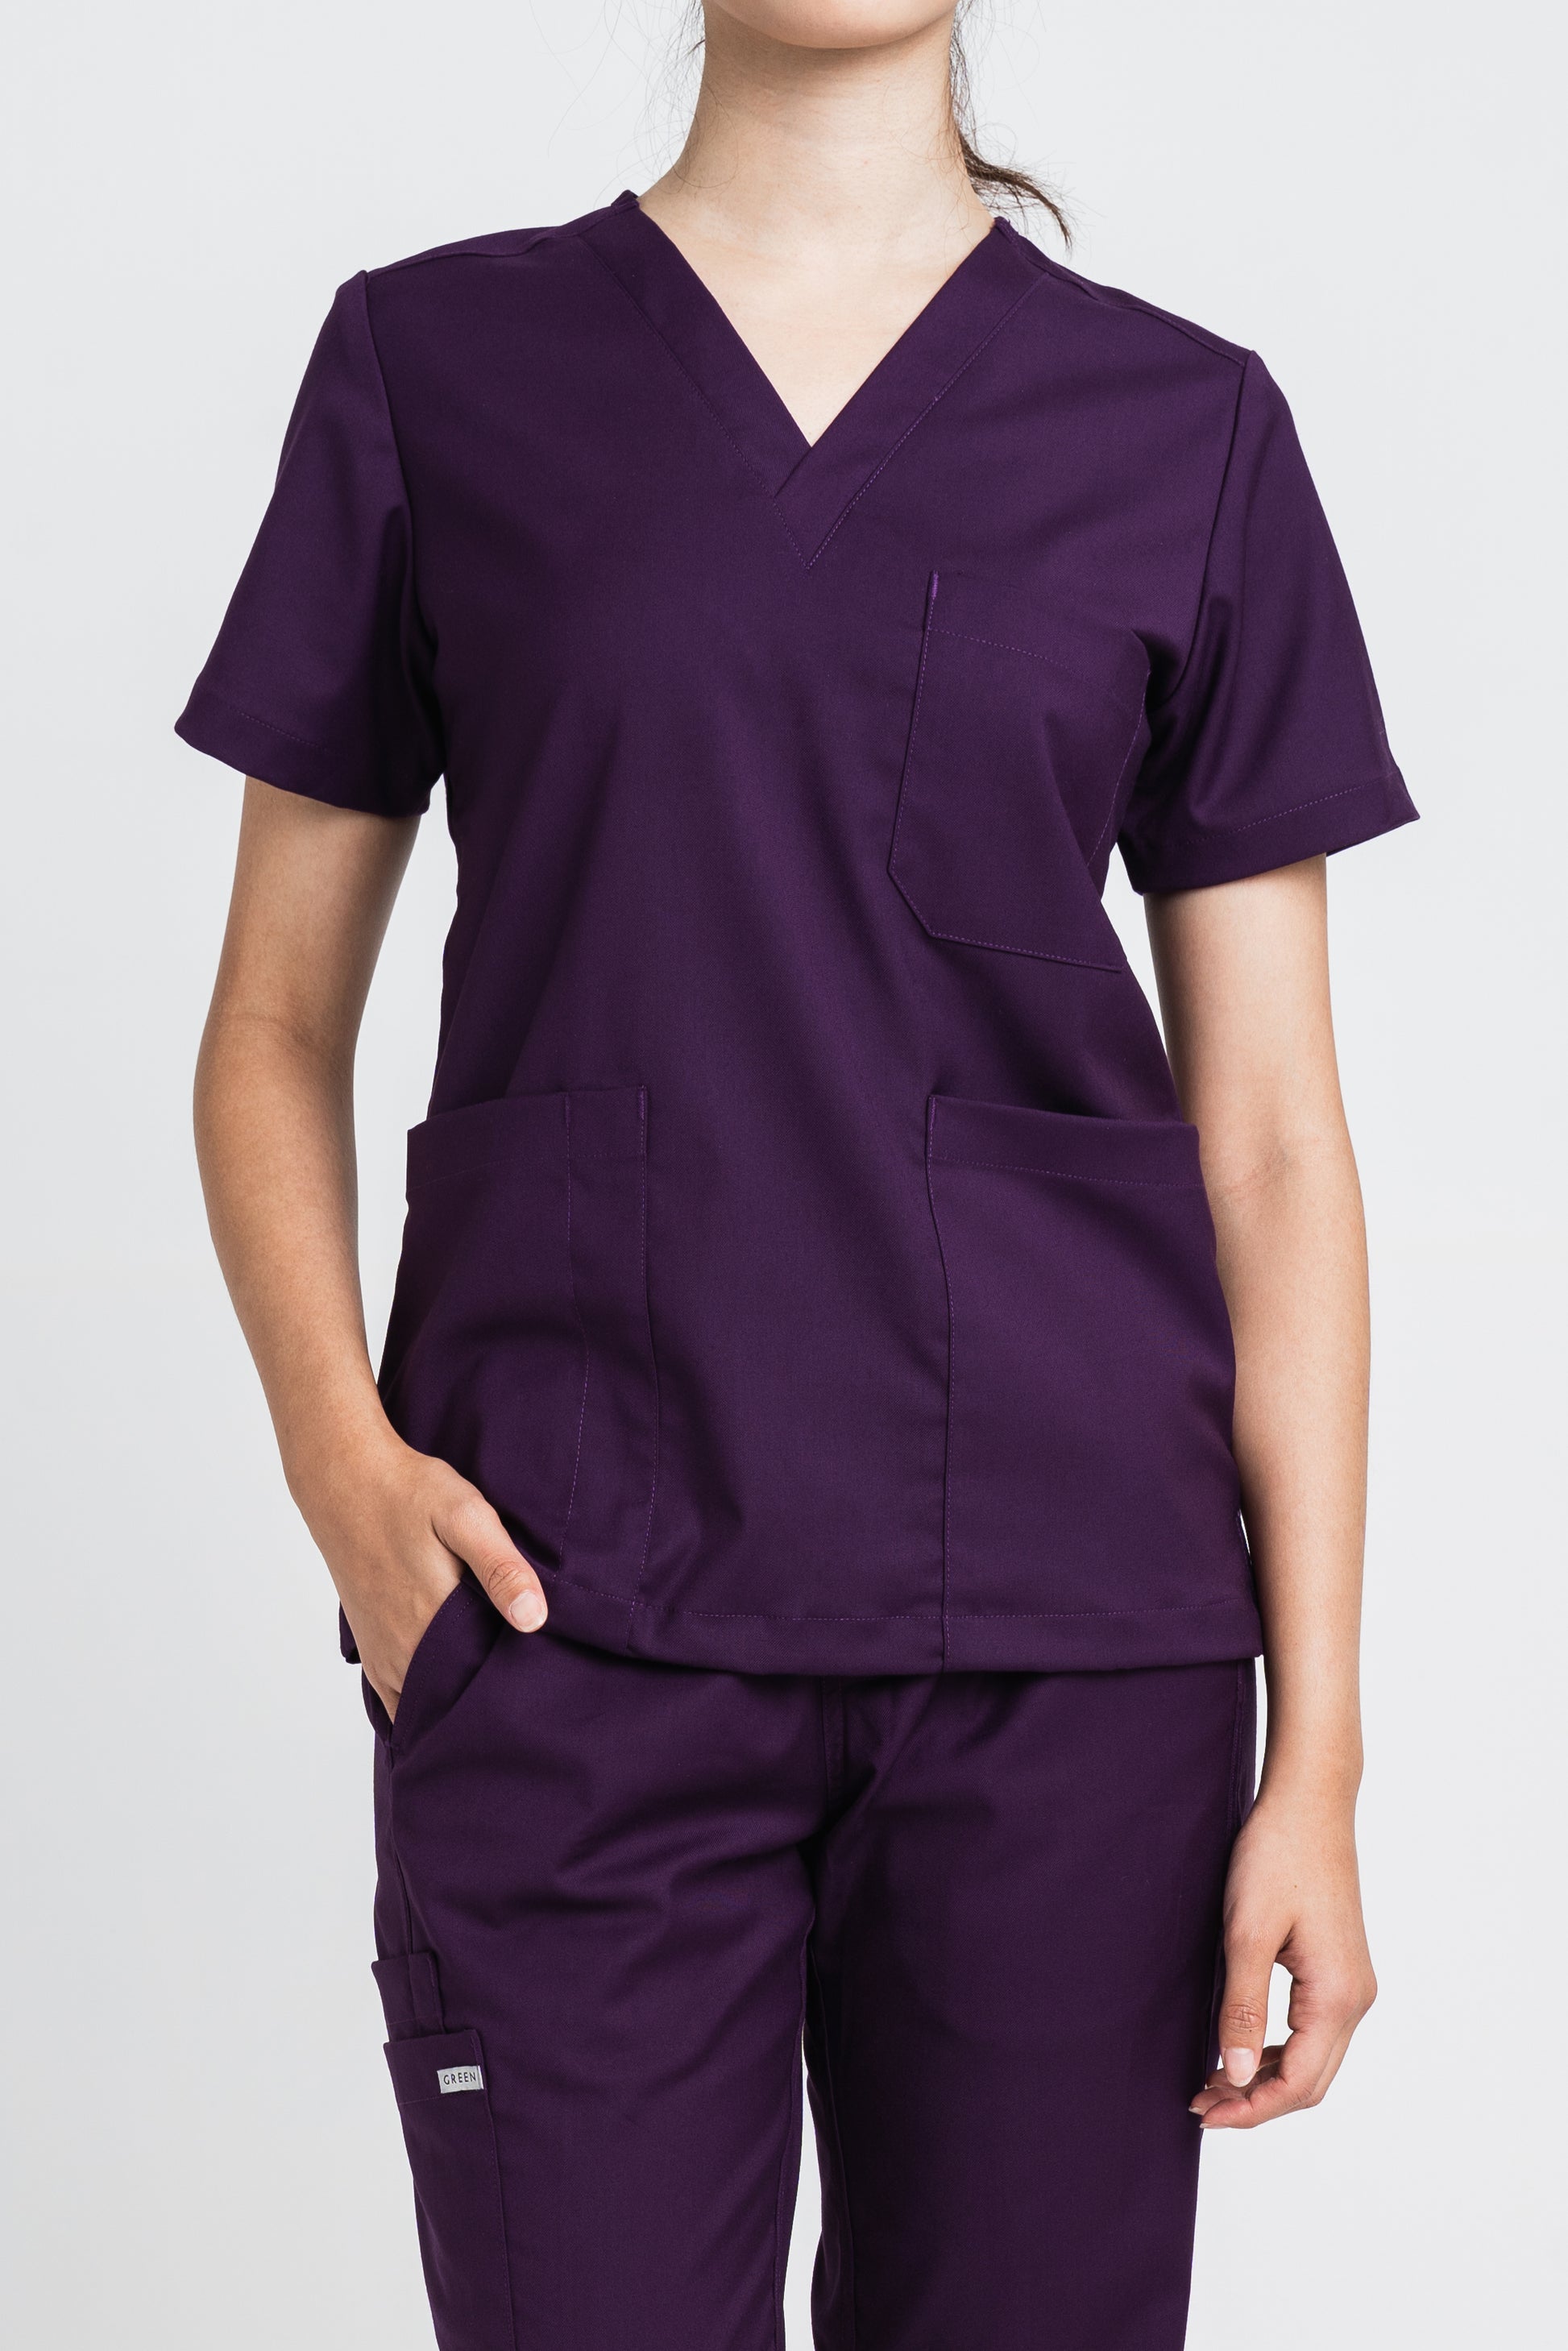 Emma Purple medical Scrub Top, Women